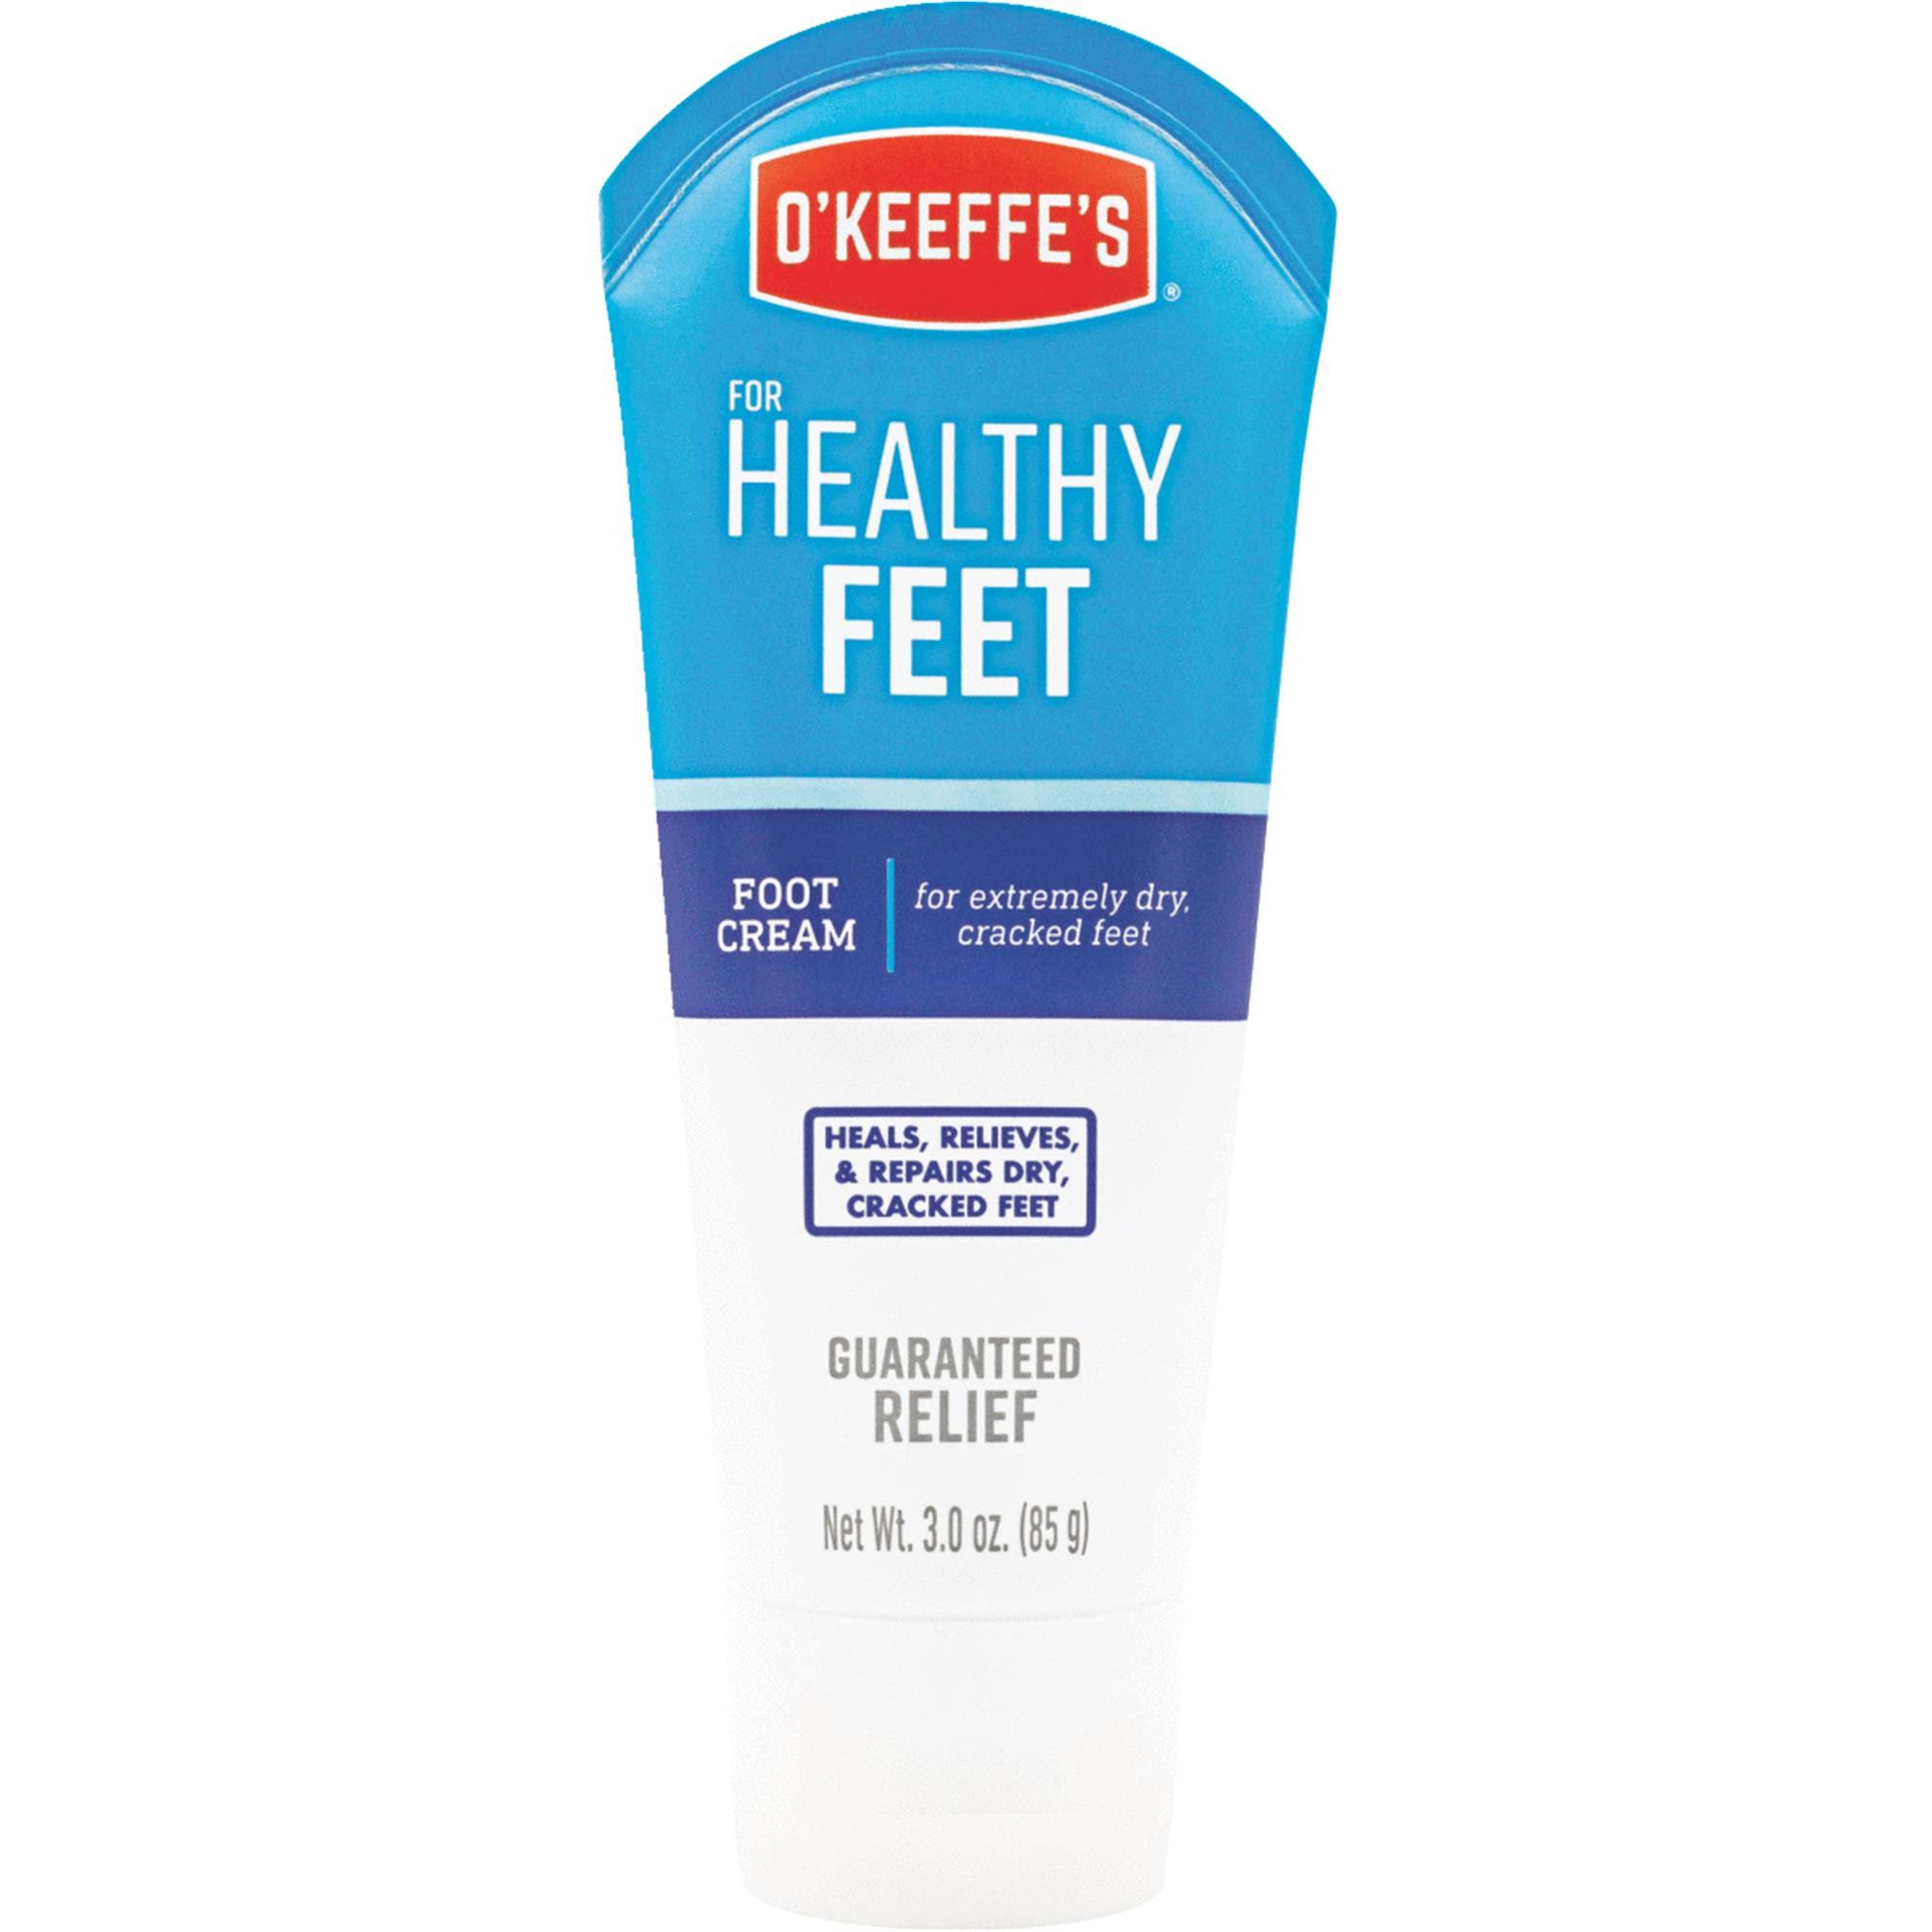 O'keeffe's healthy feet foot cream 3 oz